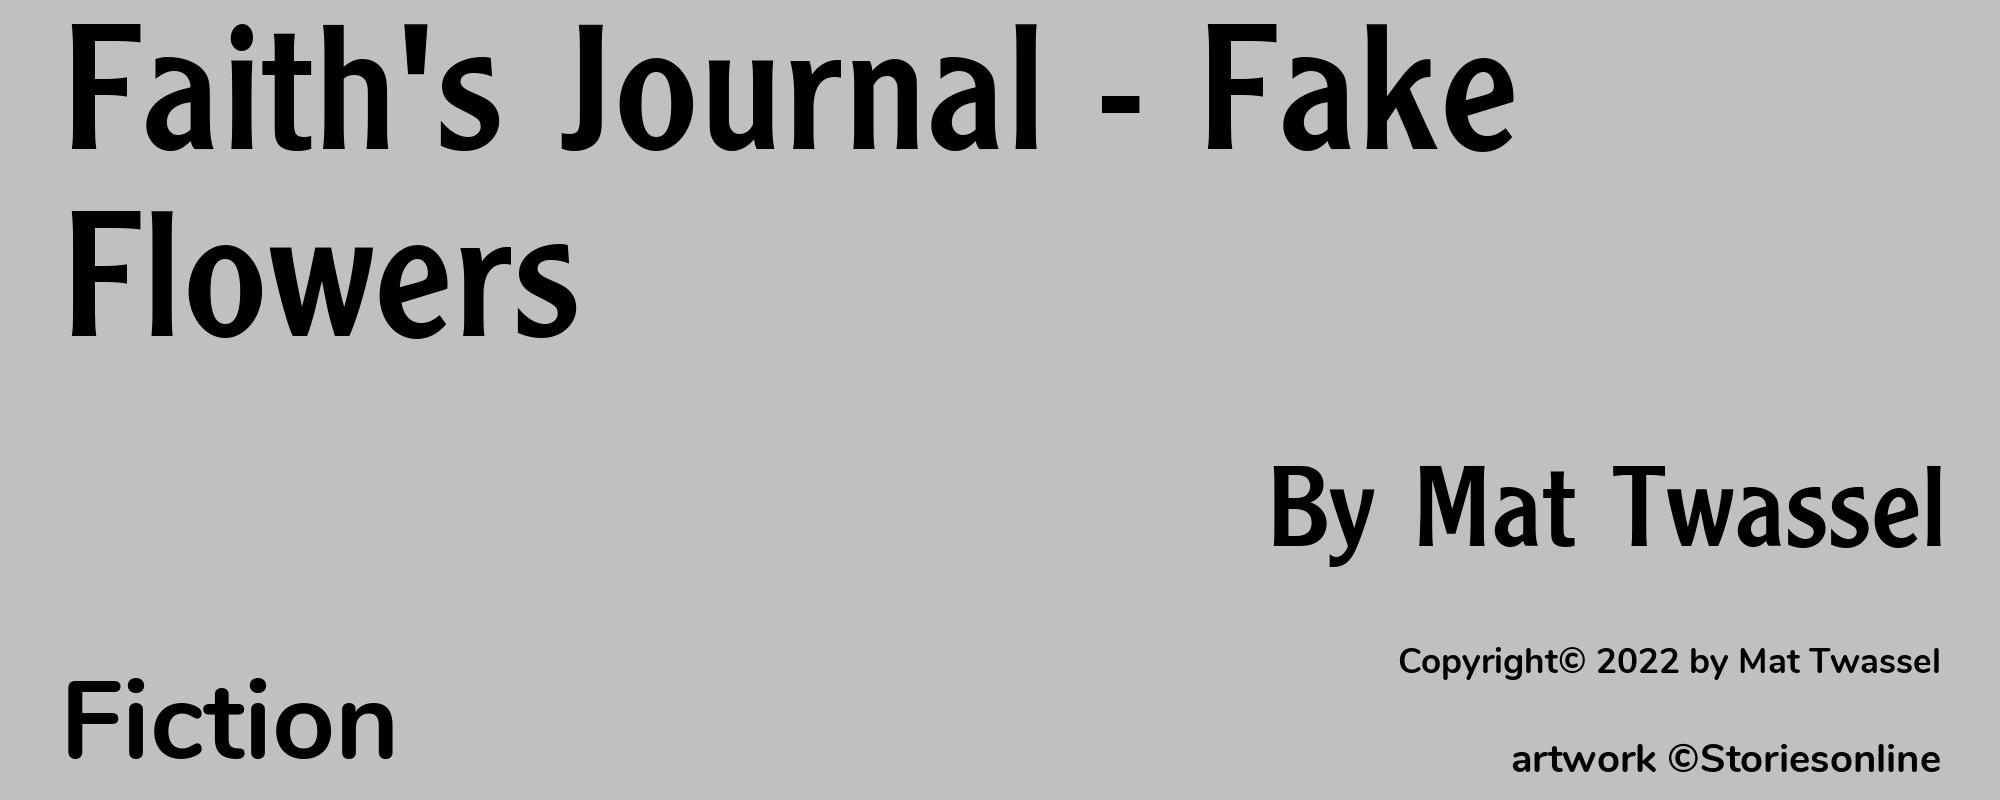 Faith's Journal - Fake Flowers - Cover